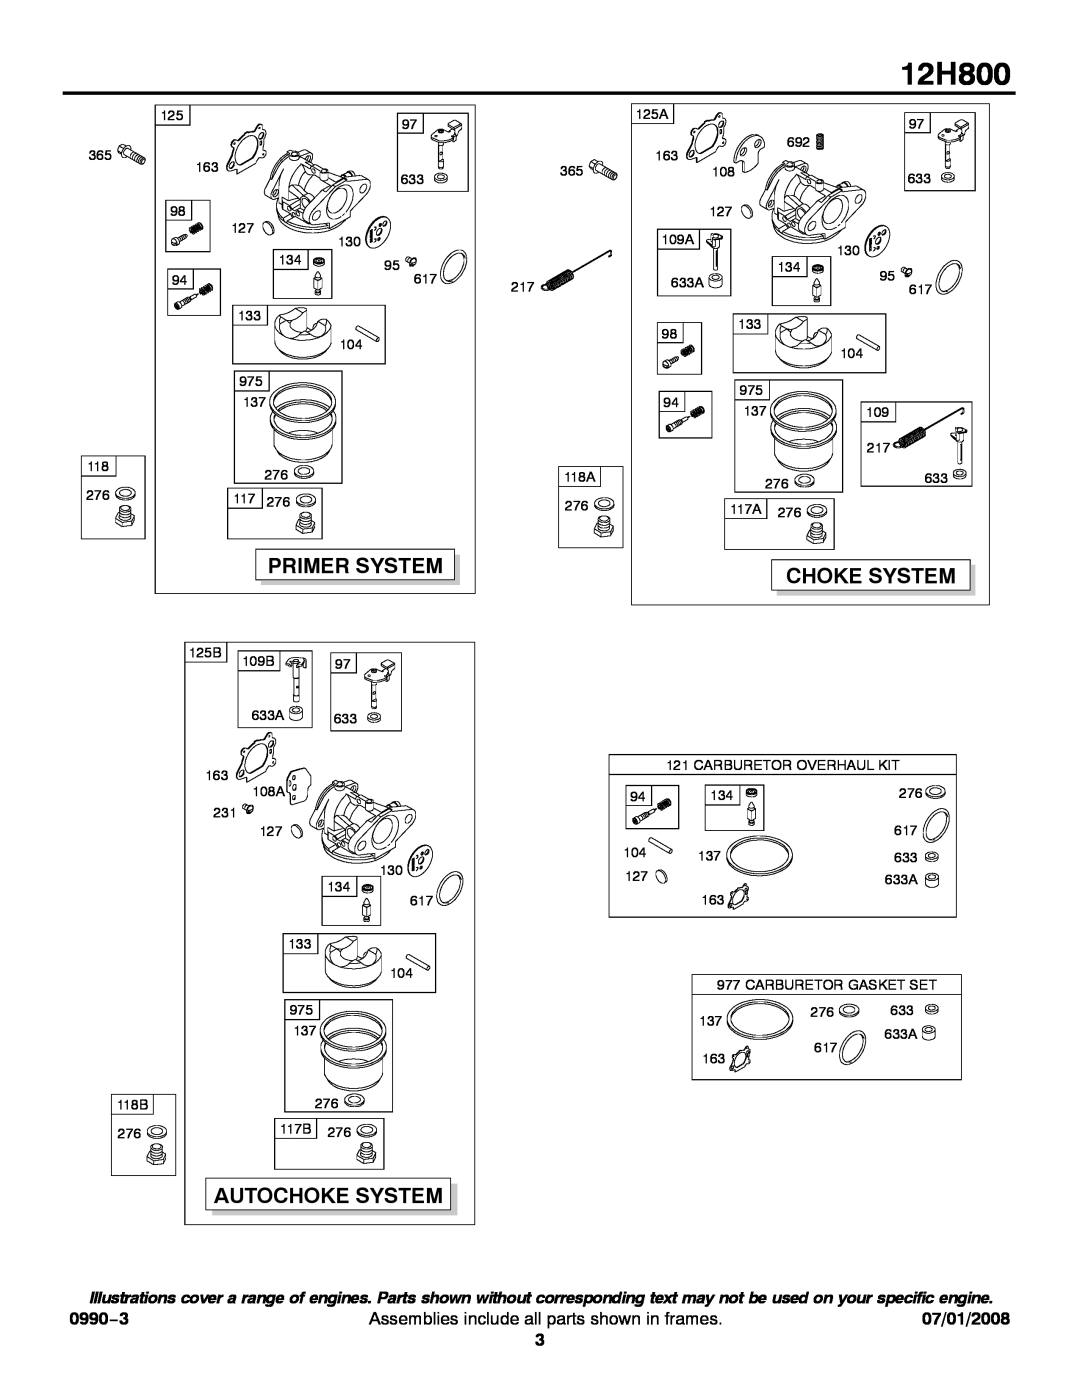 Briggs & Stratton 12H800 service manual 0990−3, Primer System, Choke System, Autochoke System, 07/01/2008 